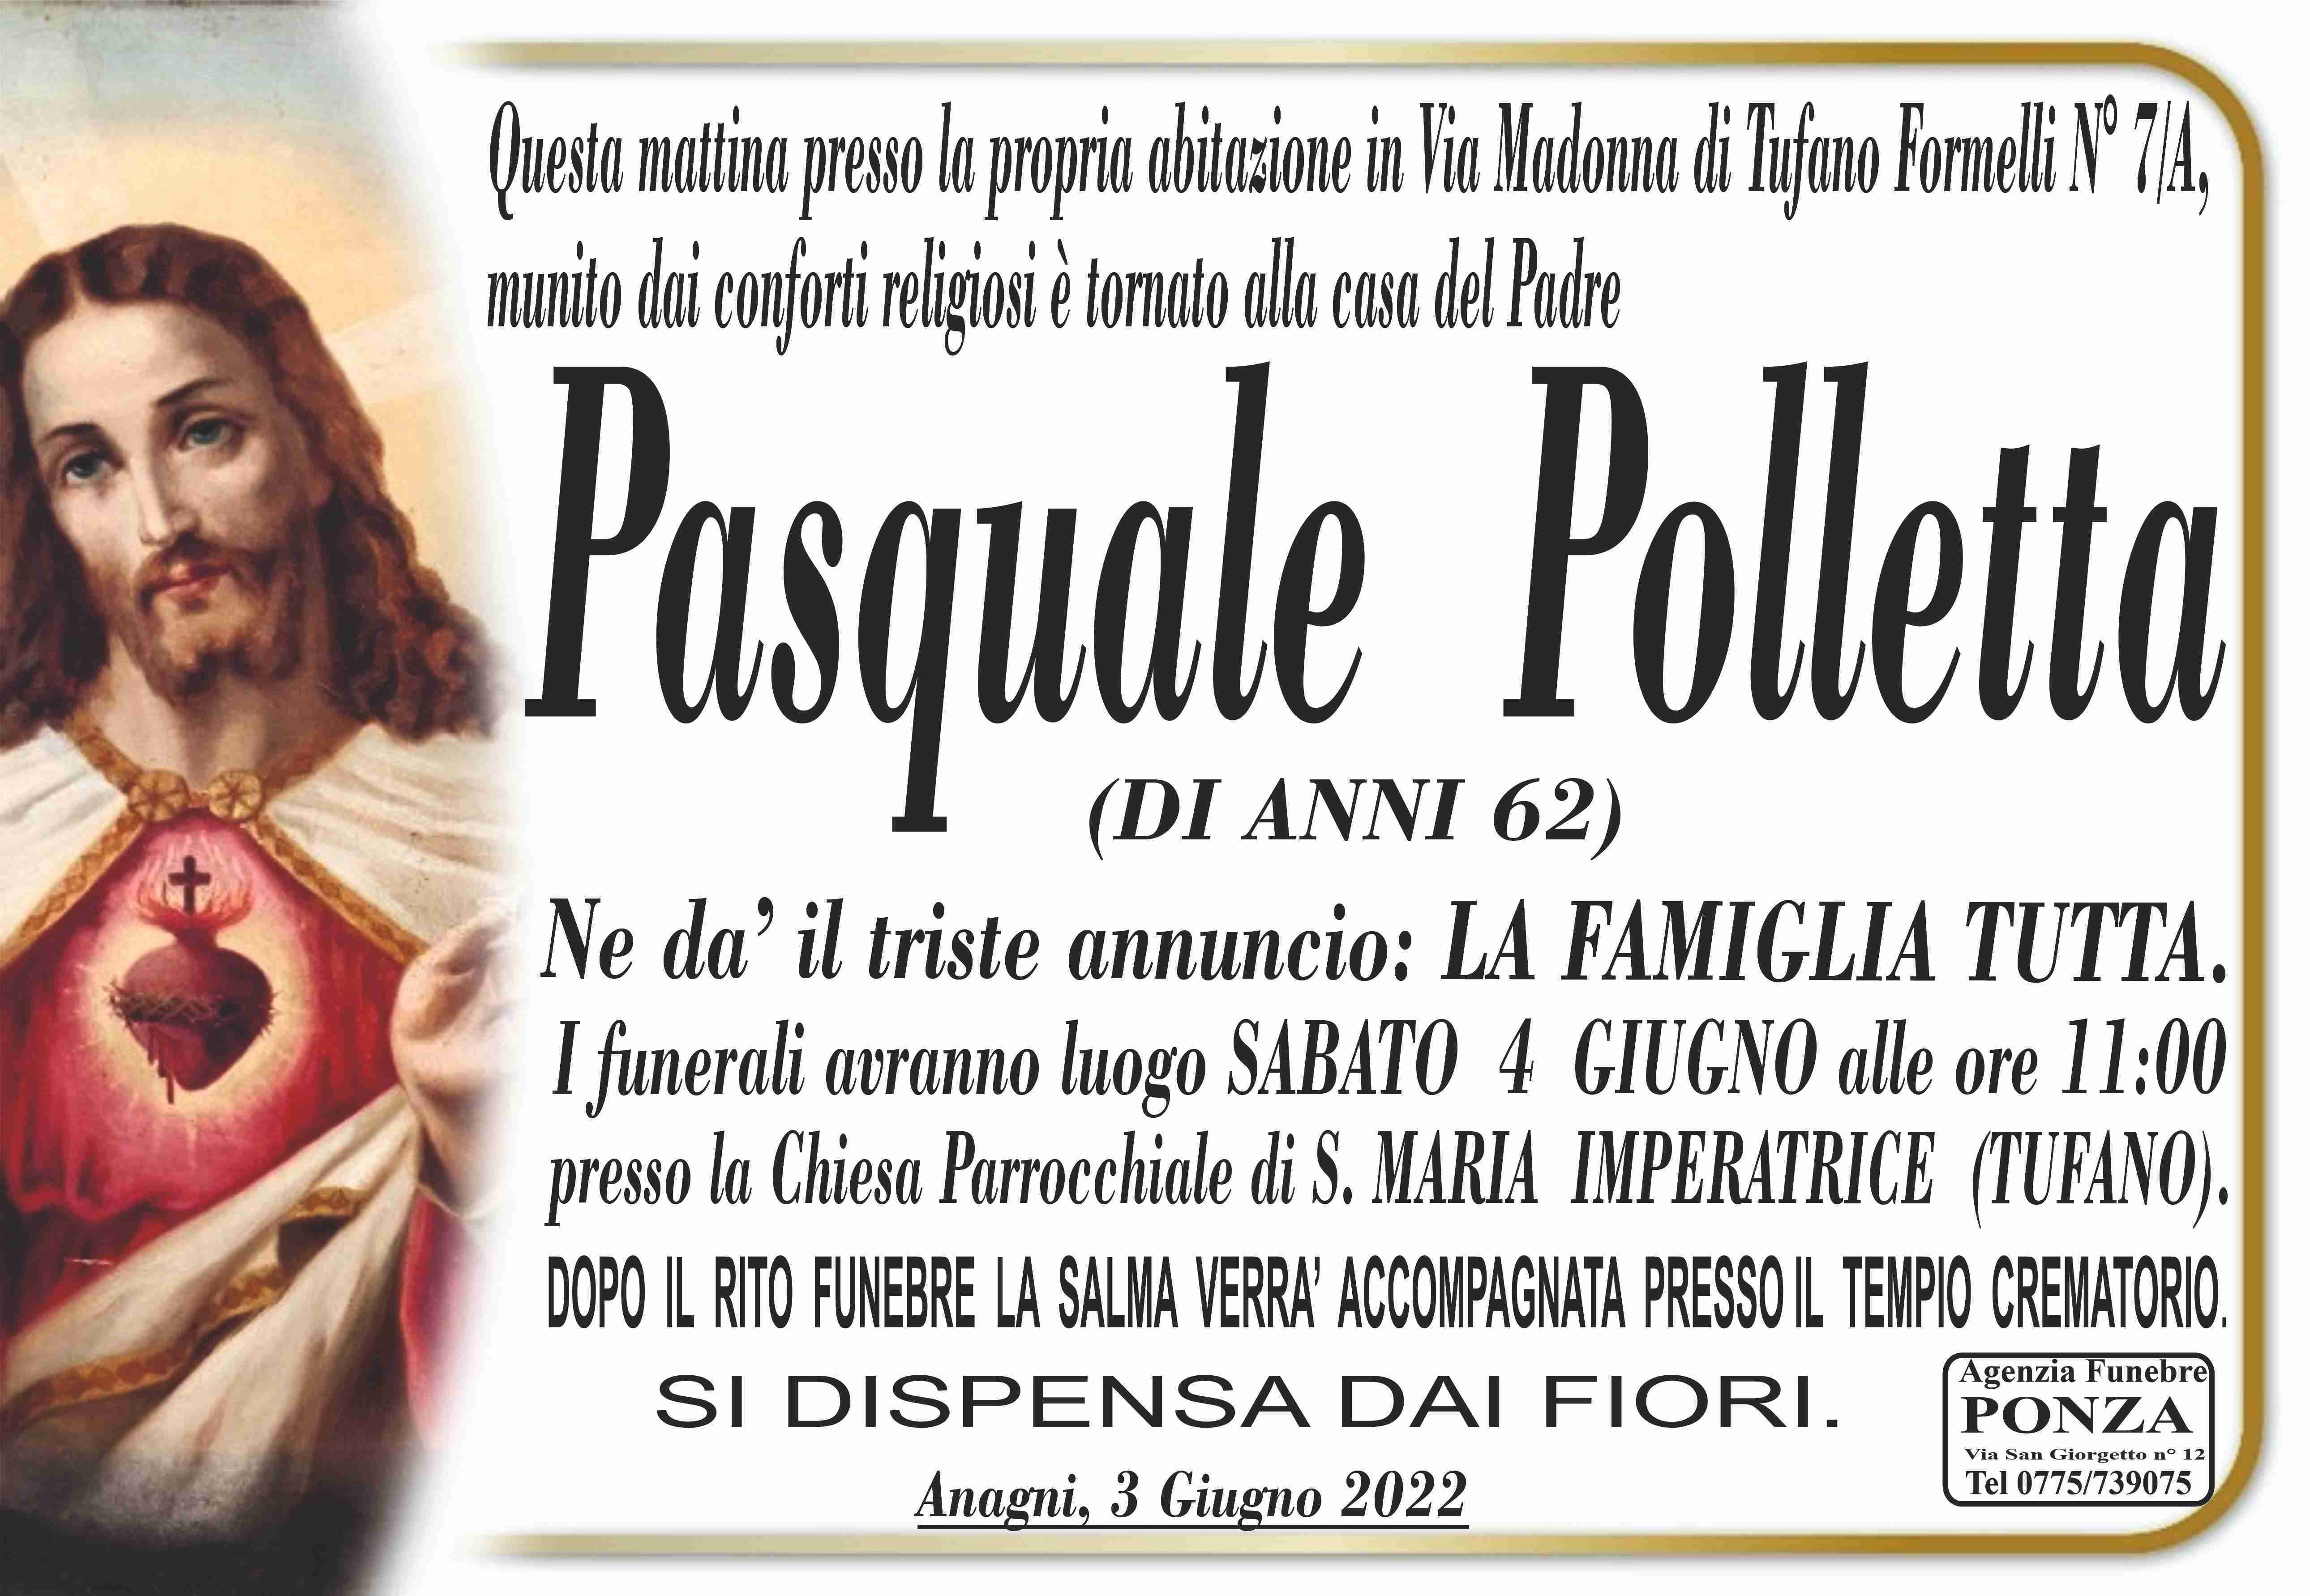 Pasquale Polletta